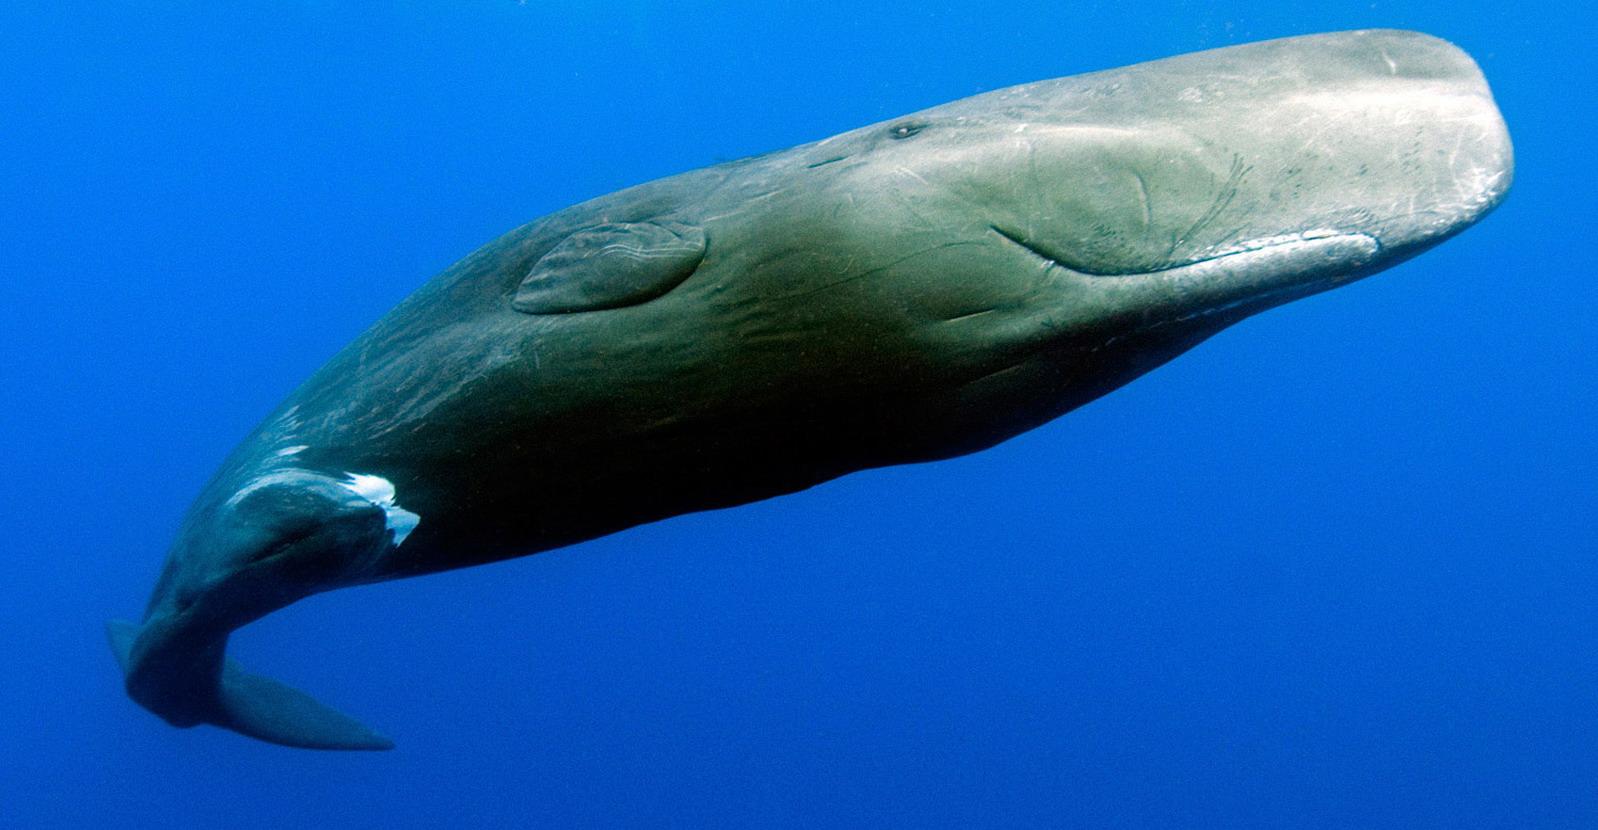 https://blogger.googleusercontent.com/img/b/R29vZ2xl/AVvXsEjuNvmcrcYj-zrFgqNmZGEDhzEhHiPbbvSi68cktCandPNjN02v3RU5fVB8dw9xlyD9Mc0vZZE3KrcMaS5CMrUh4PlOPYX3ocUqnbM1CZRR879Q1RaOIkScSaOz39fEyJT-UDHWdeI_yCjN/s1600/Sperm-Whale.jpg